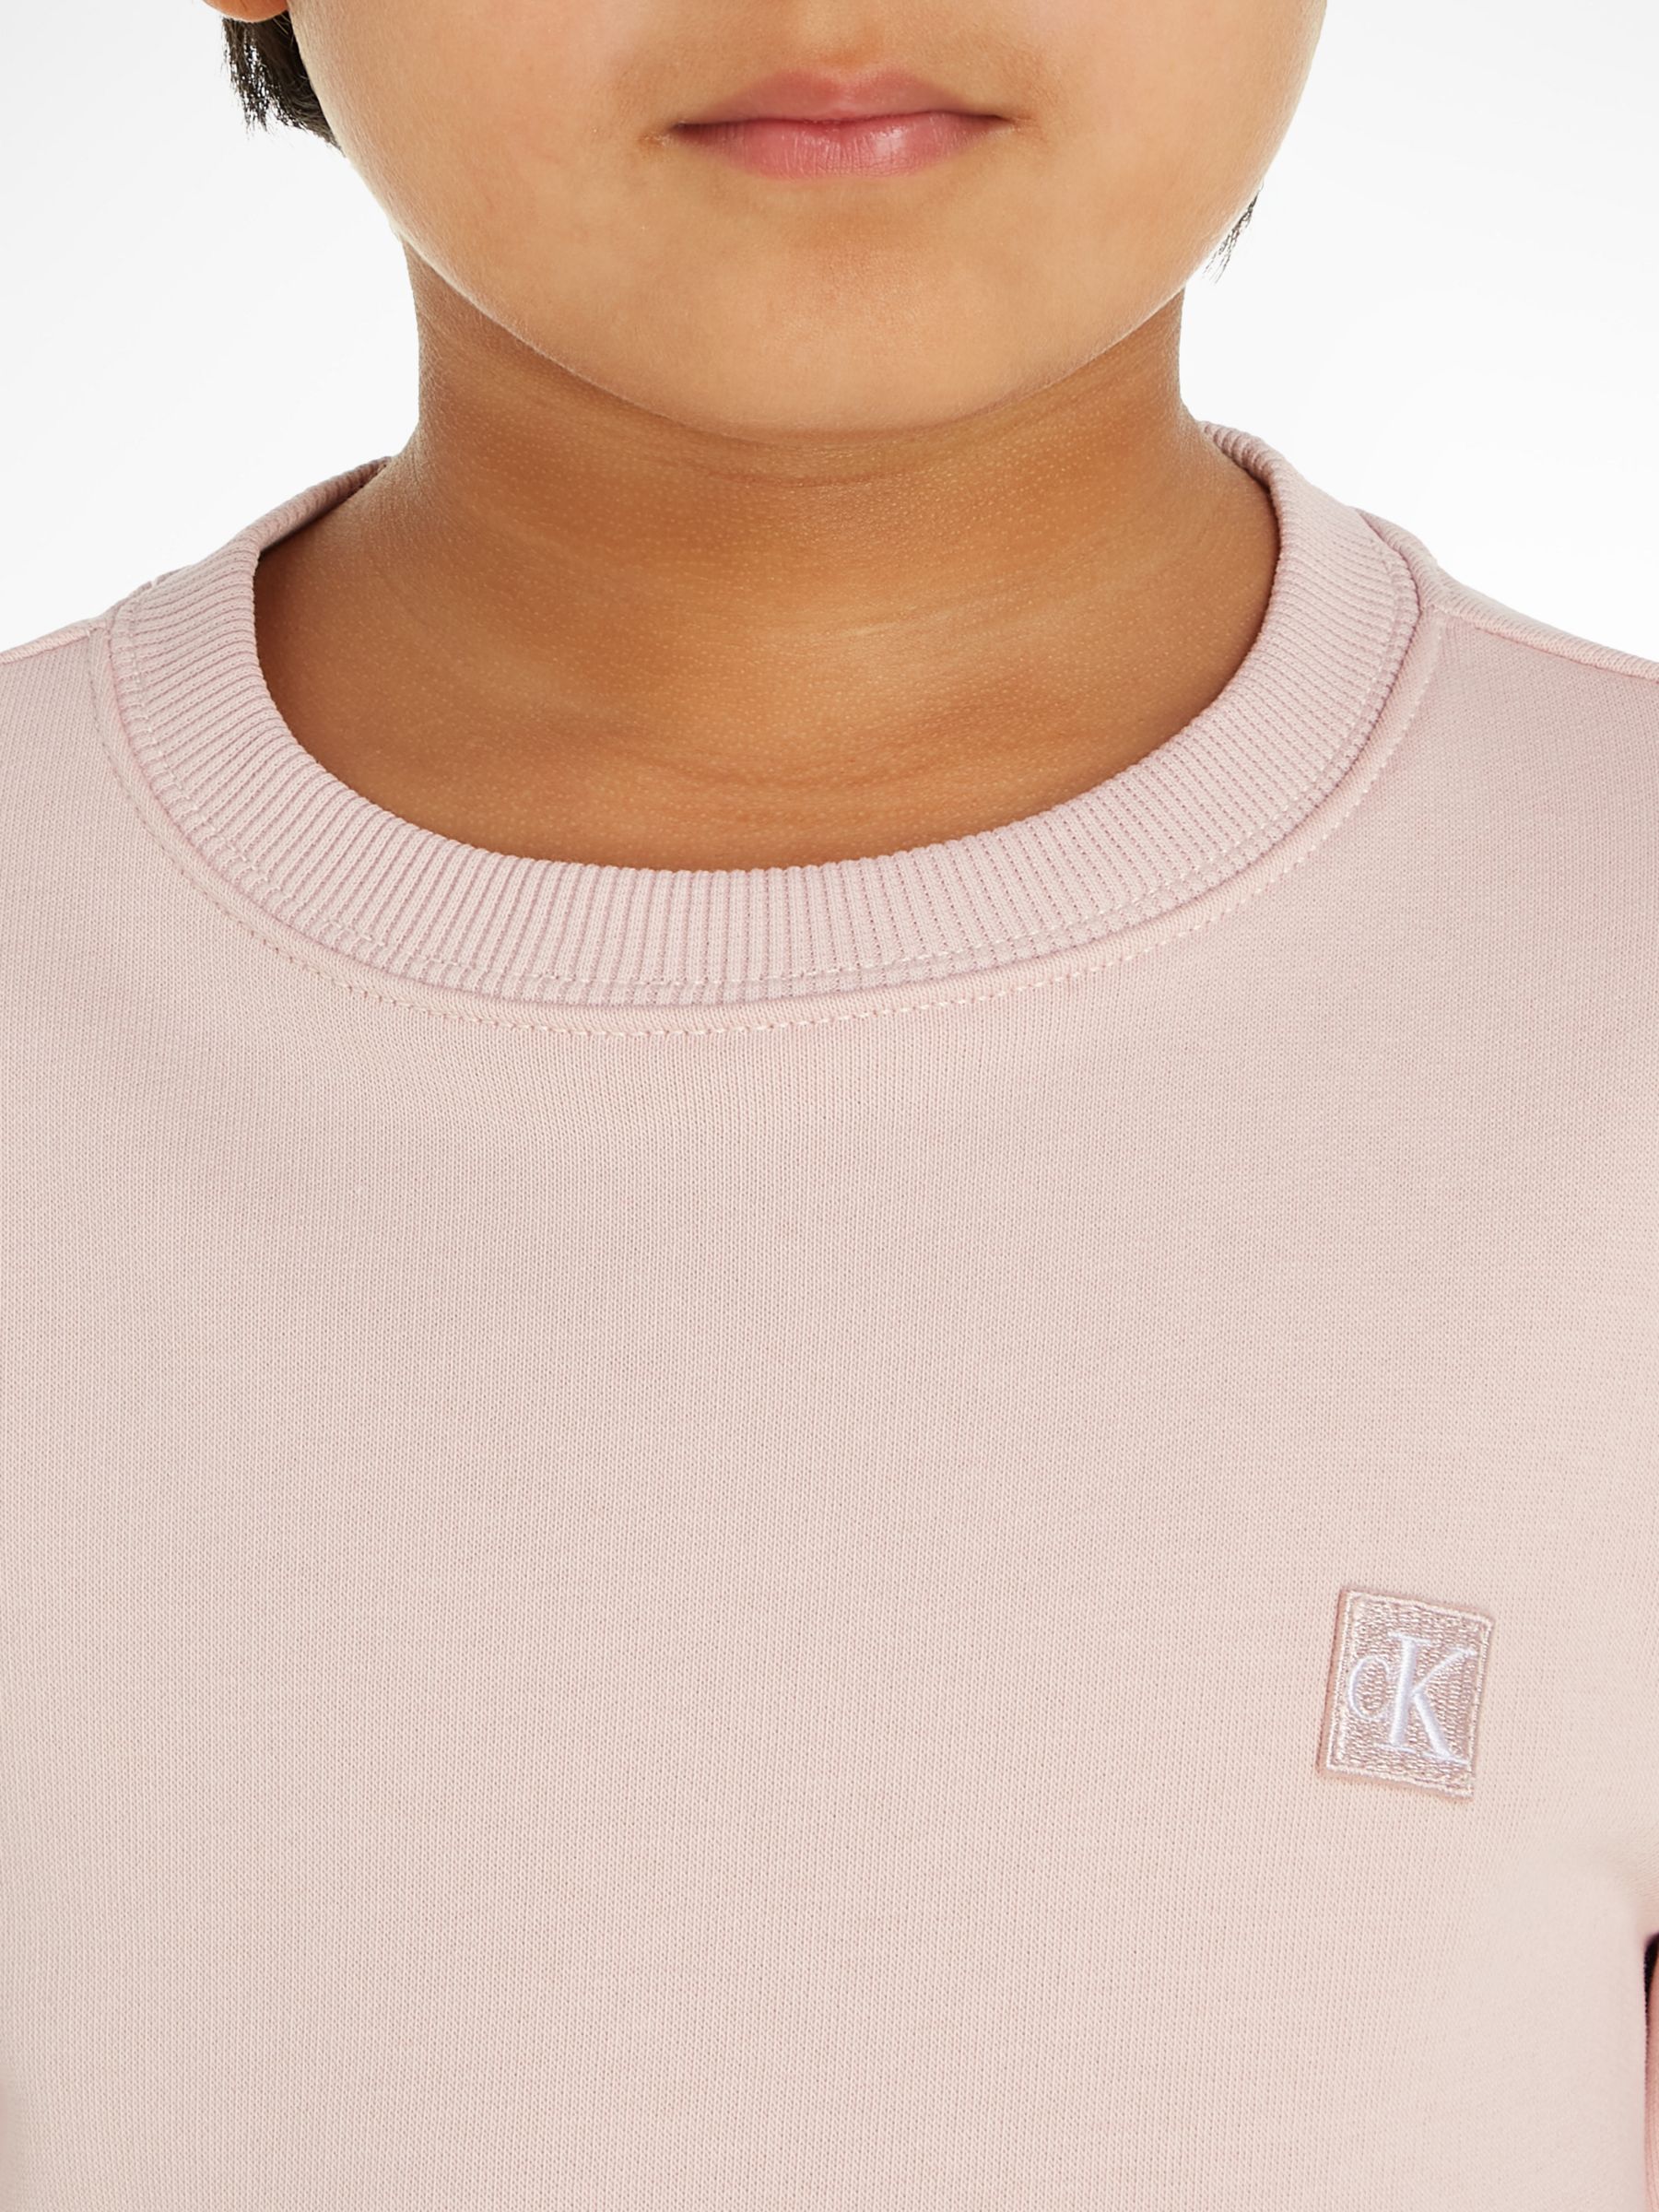 Calvin Klein Kids' Monogram Mini Badge Sweatshirt, Sepia Rose, 10 years